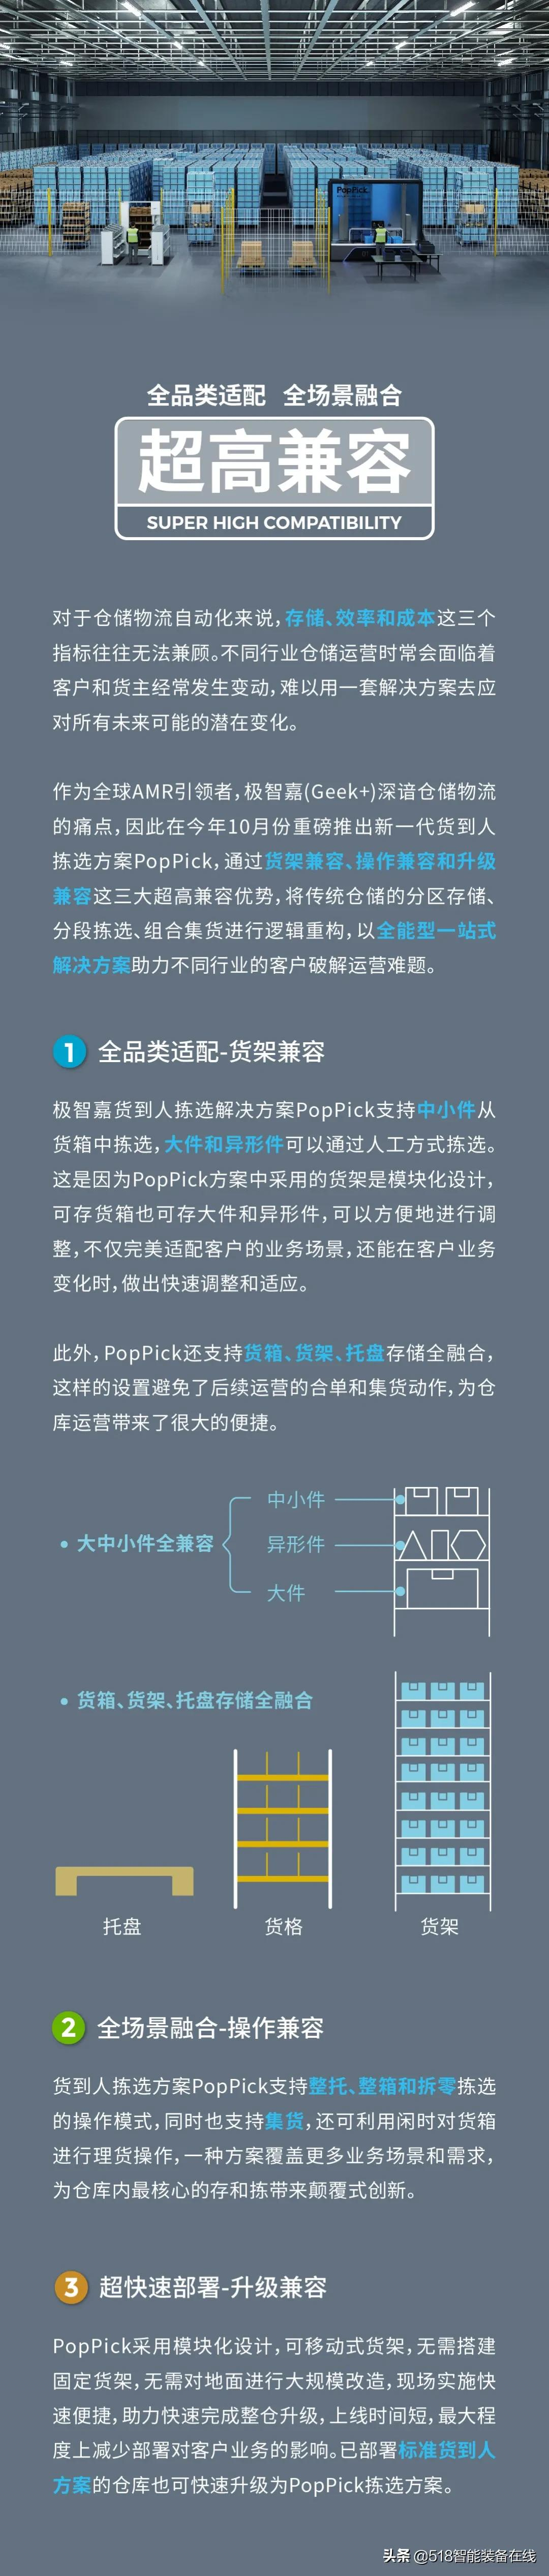 PopPick优势详解丨「超高兼容」重构仓储运营底层逻辑